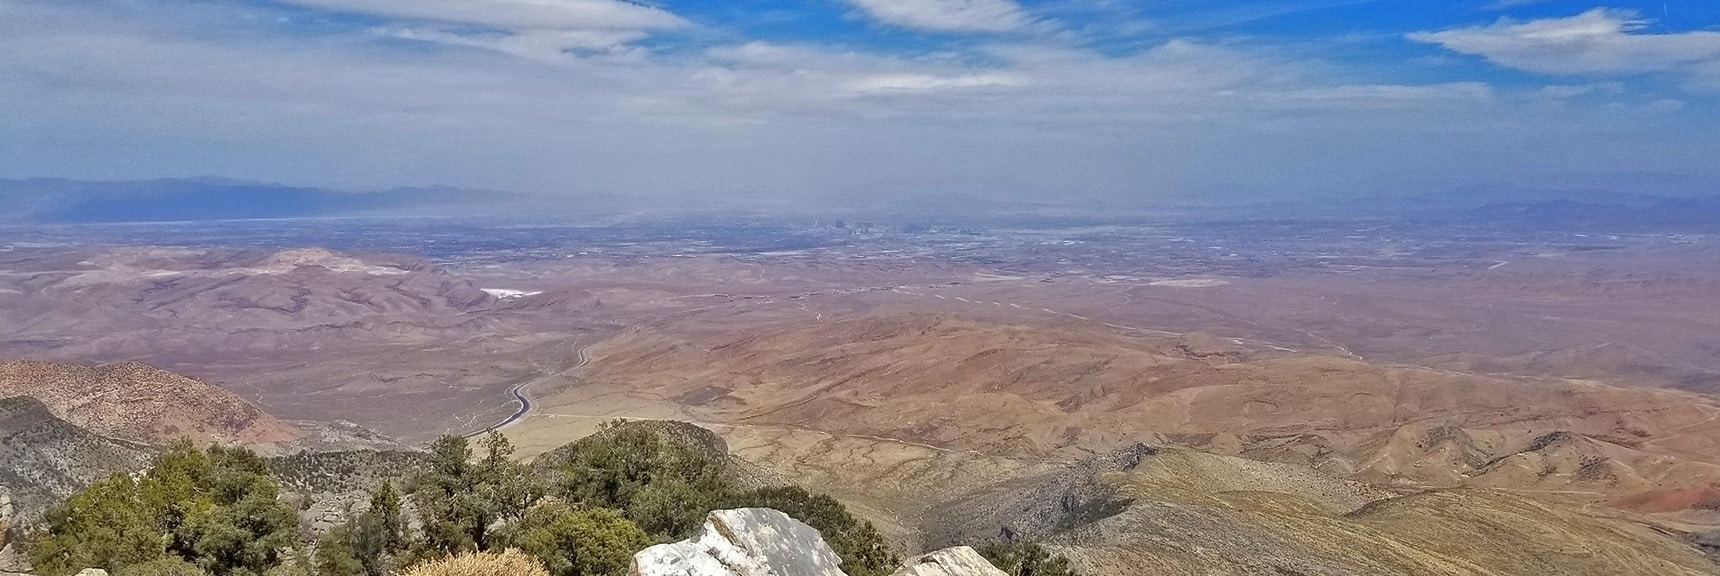 View Toward Las Vegas Strip and Beyond in the Haze on This Windy, Dusty Day. | Potosi Mountain Spring Mountains Nevada